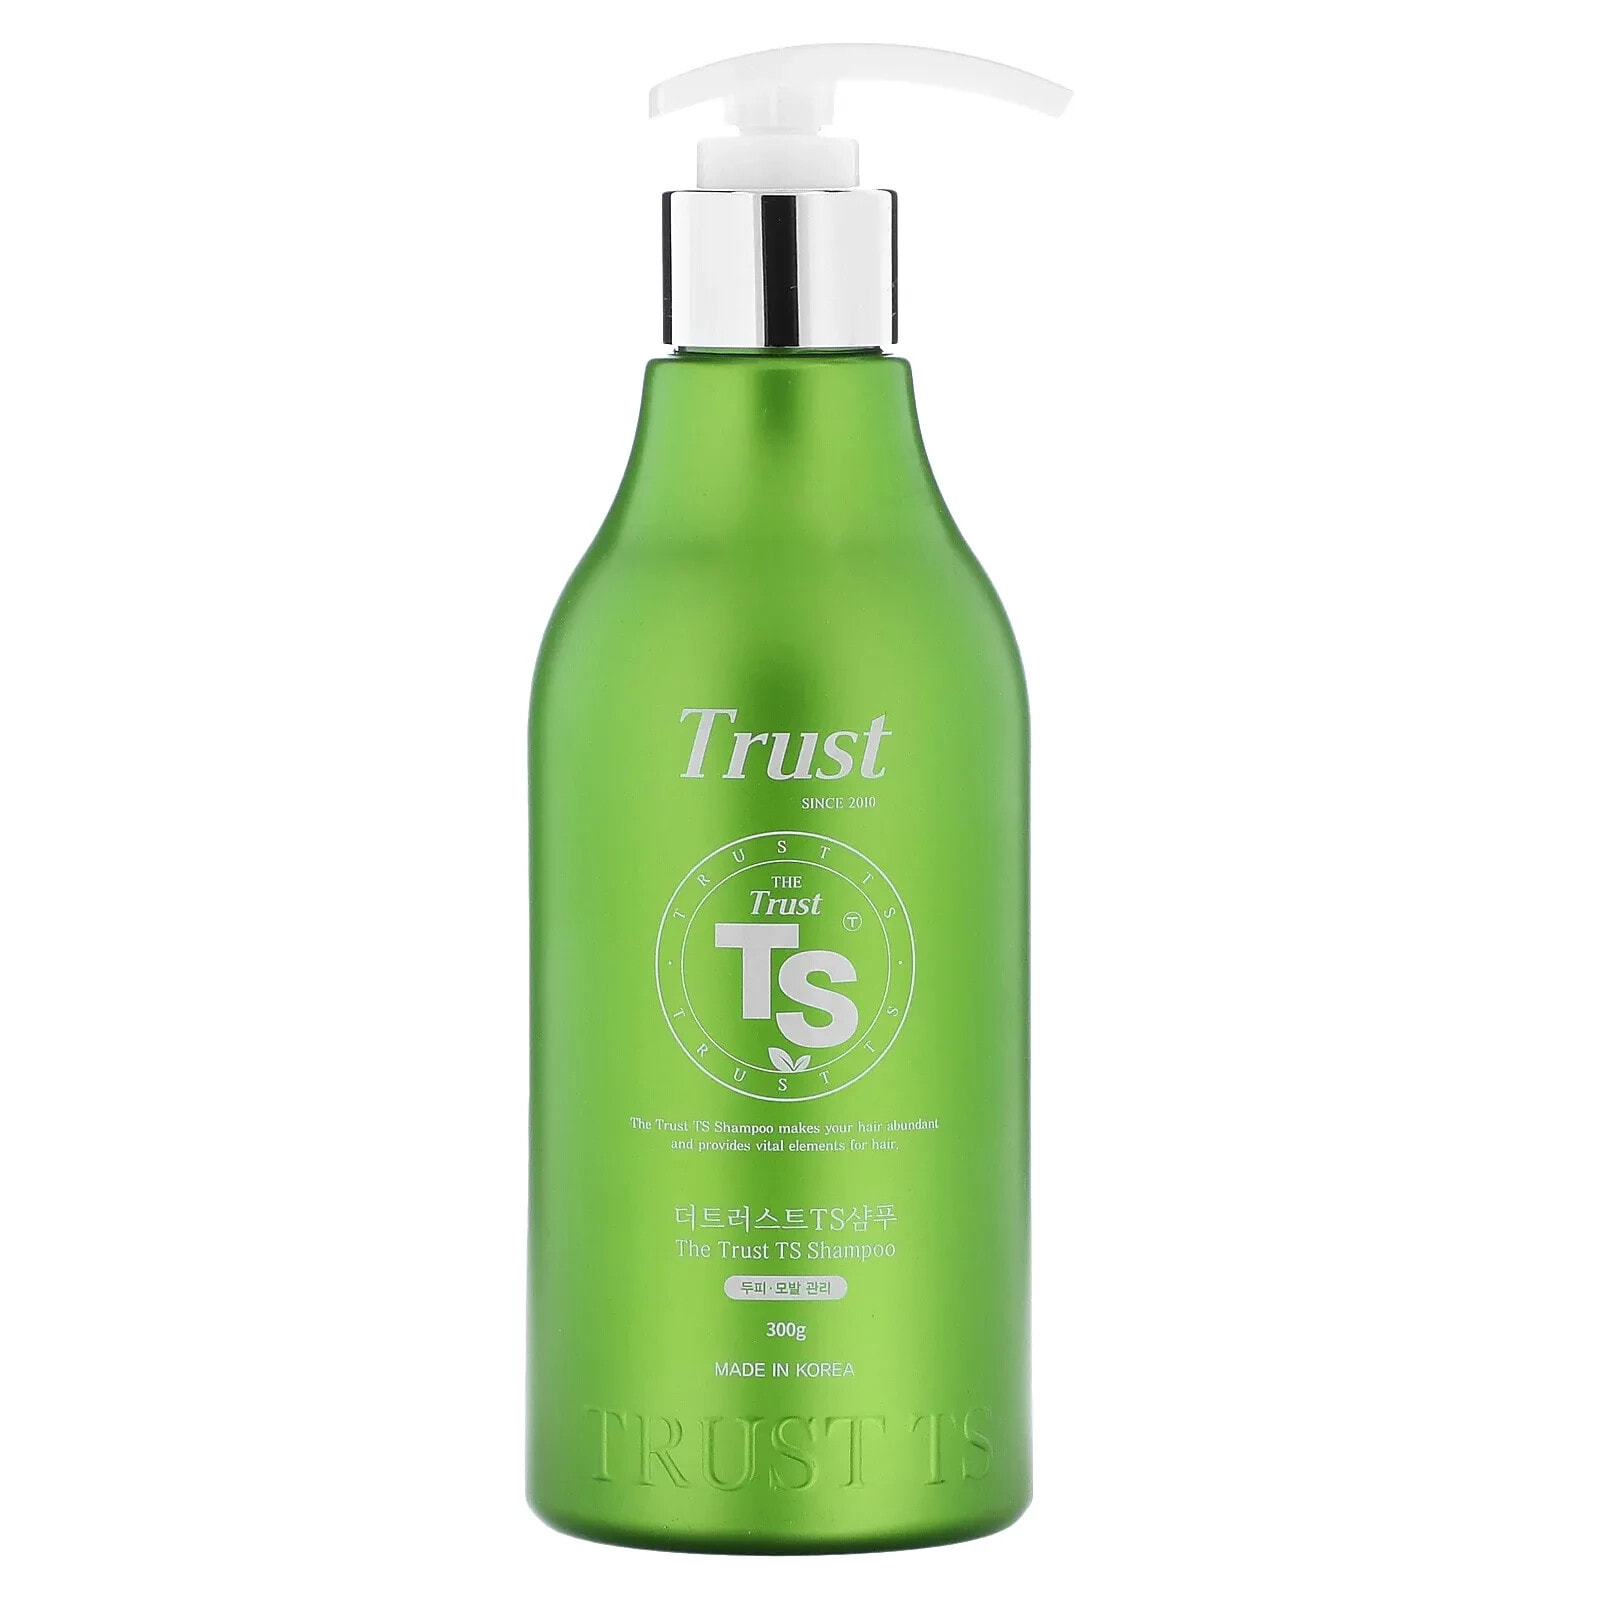 The Trust TS Shampoo, 10.58 oz (300 g)